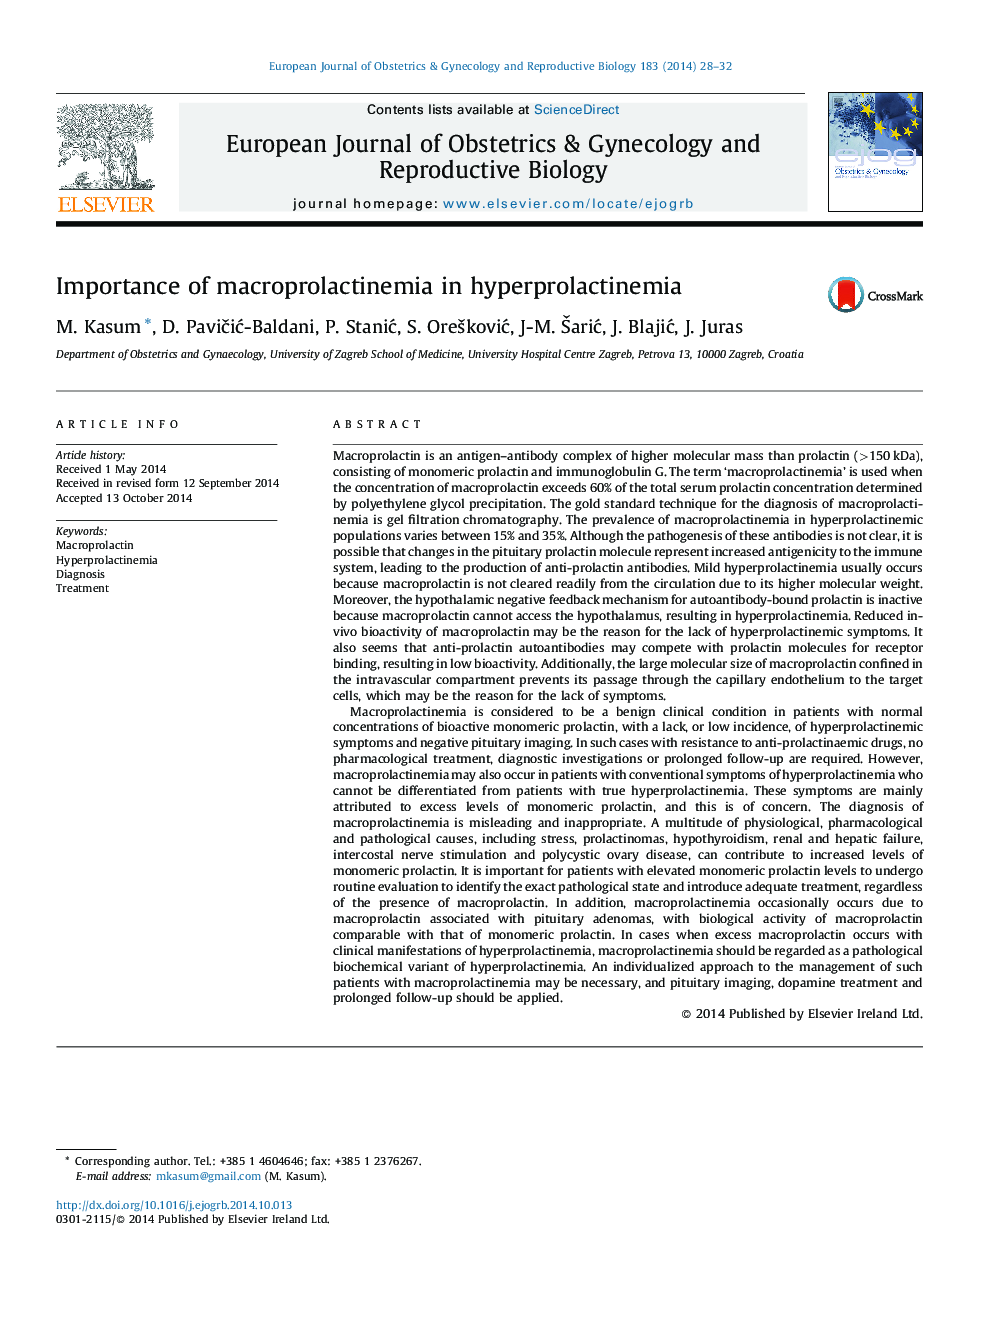 Importance of macroprolactinemia in hyperprolactinemia